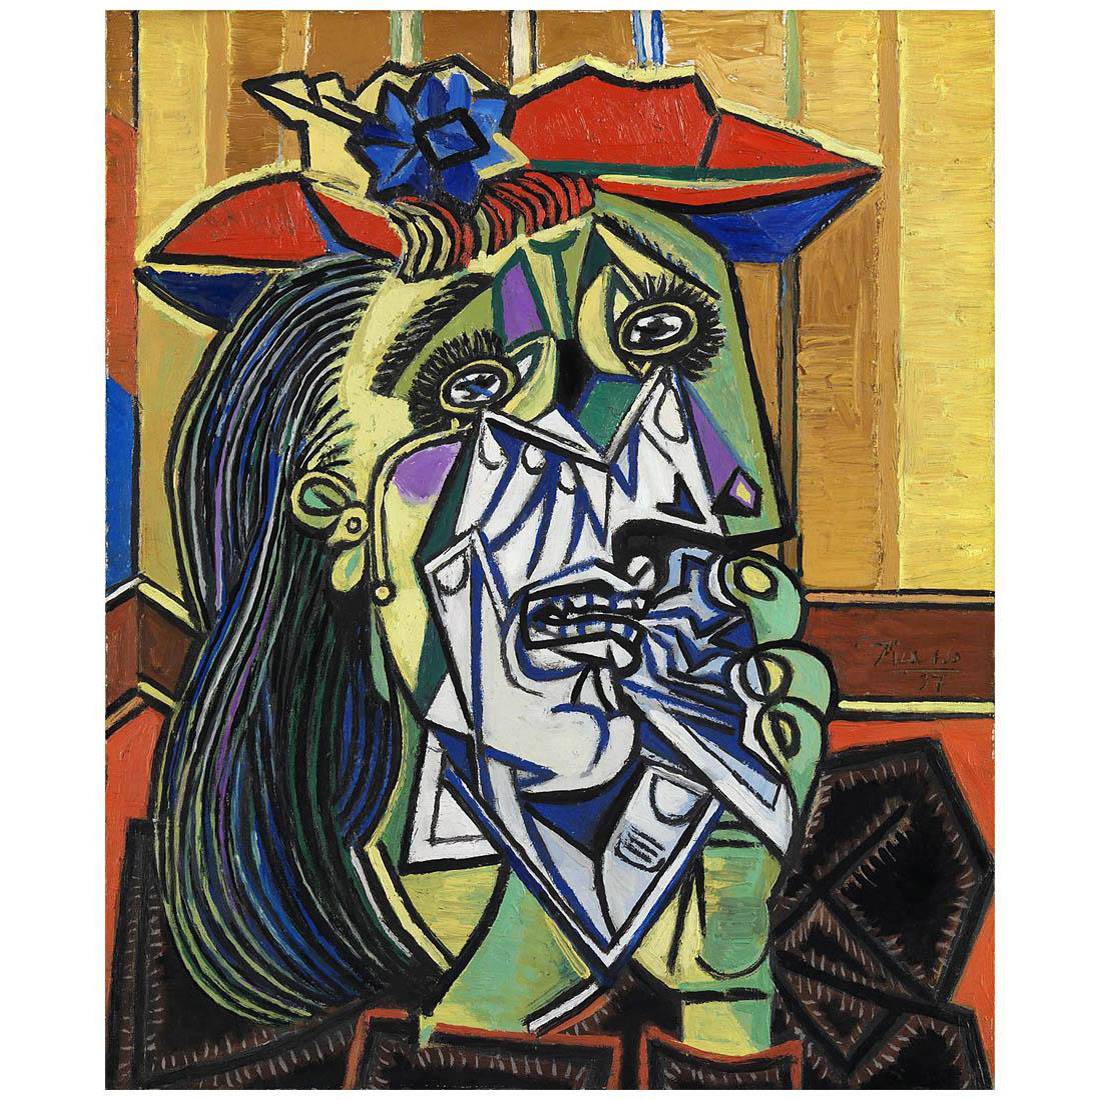 Pablo Picasso. Femme en pleurs. 1937. Tate Modern, London